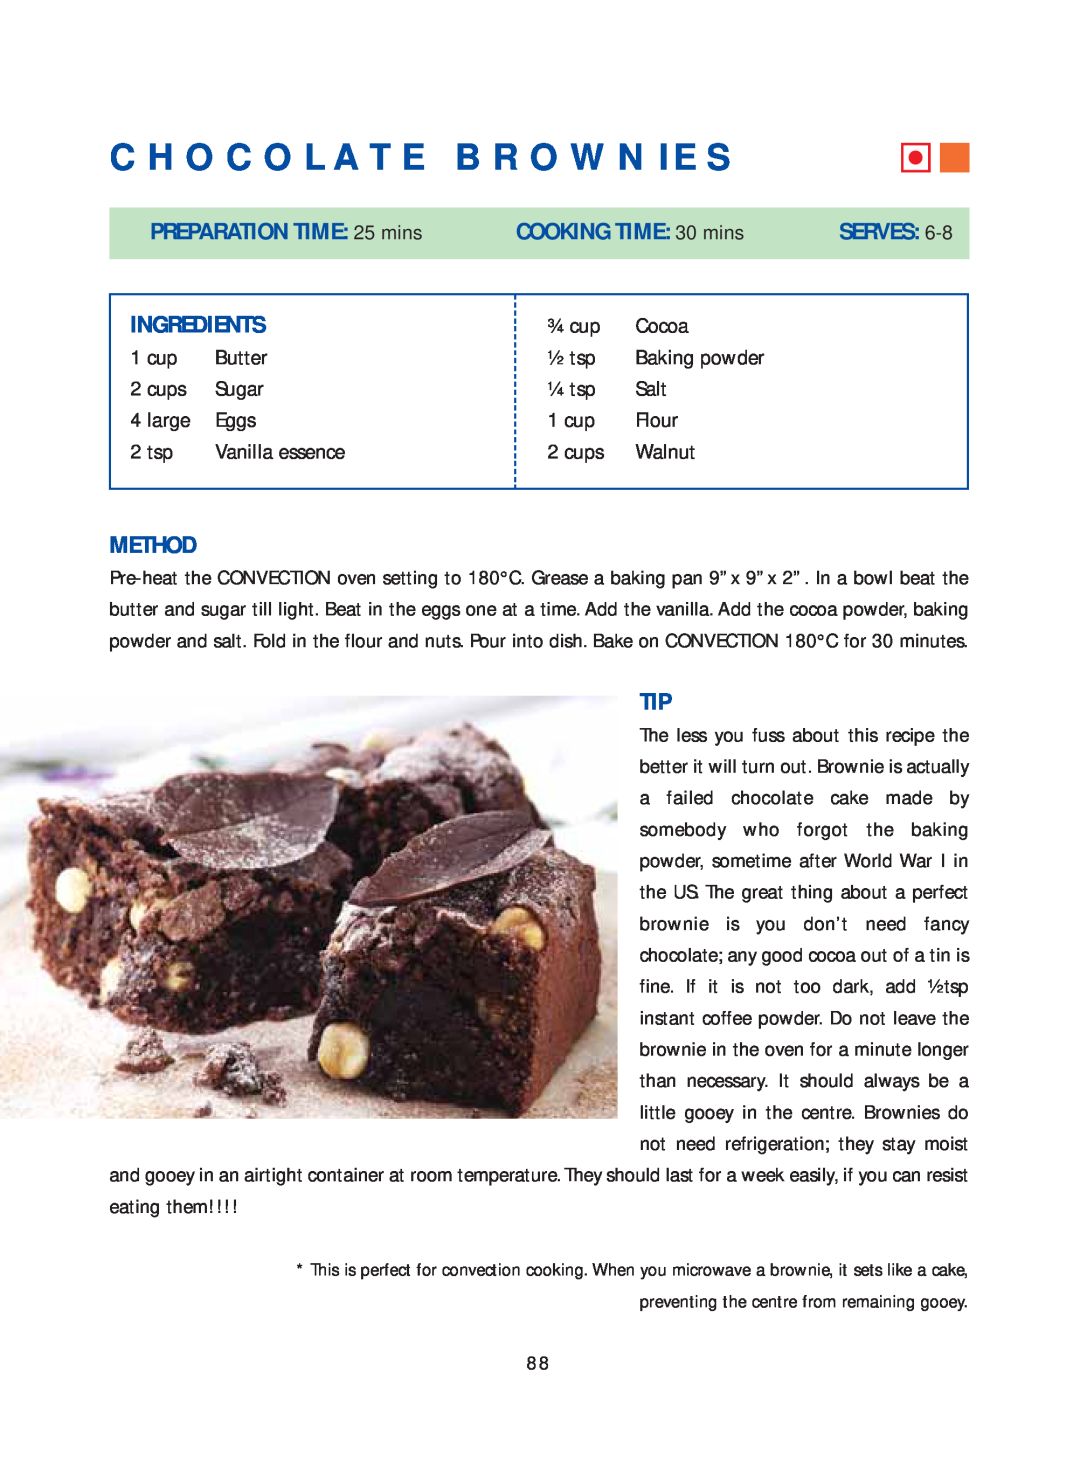 Samsung Microwave Oven warranty Chocolate Brownies, PREPARATION TIME: 25 mins, COOKING TIME: 30 mins, Ingredients, Method 